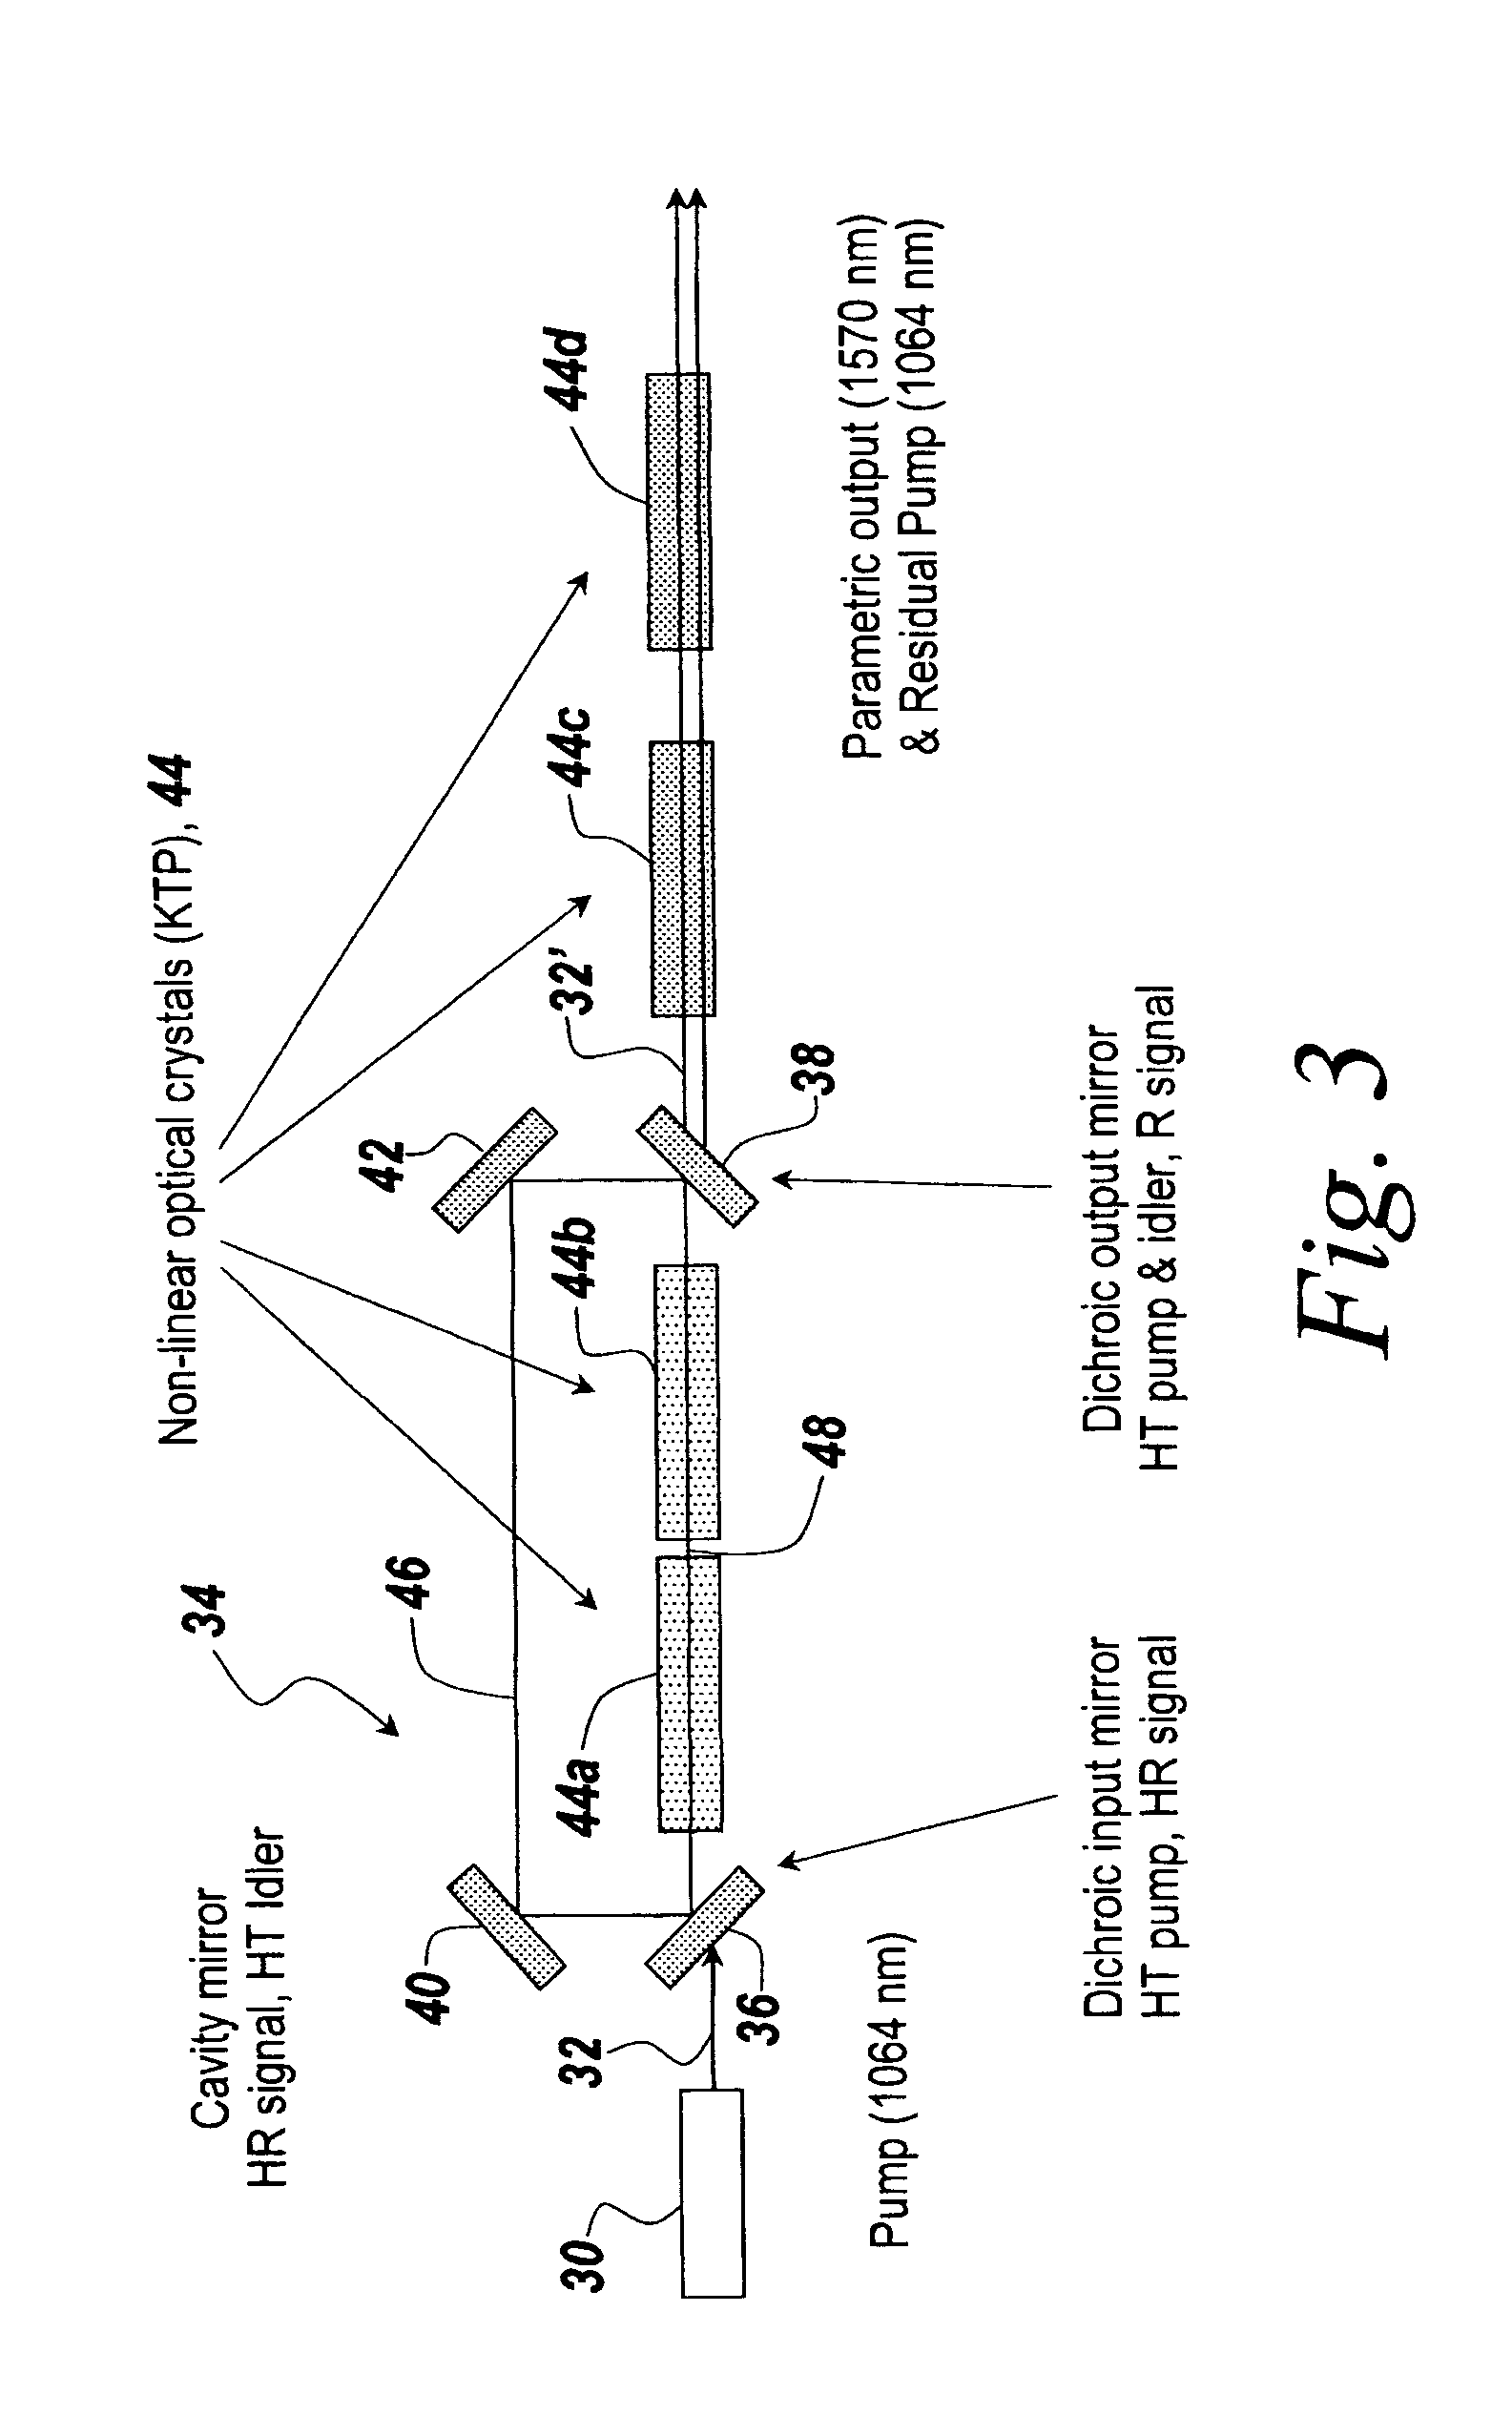 Ring optical parametric oscillator/optical parametric amplifier combination in single beamline